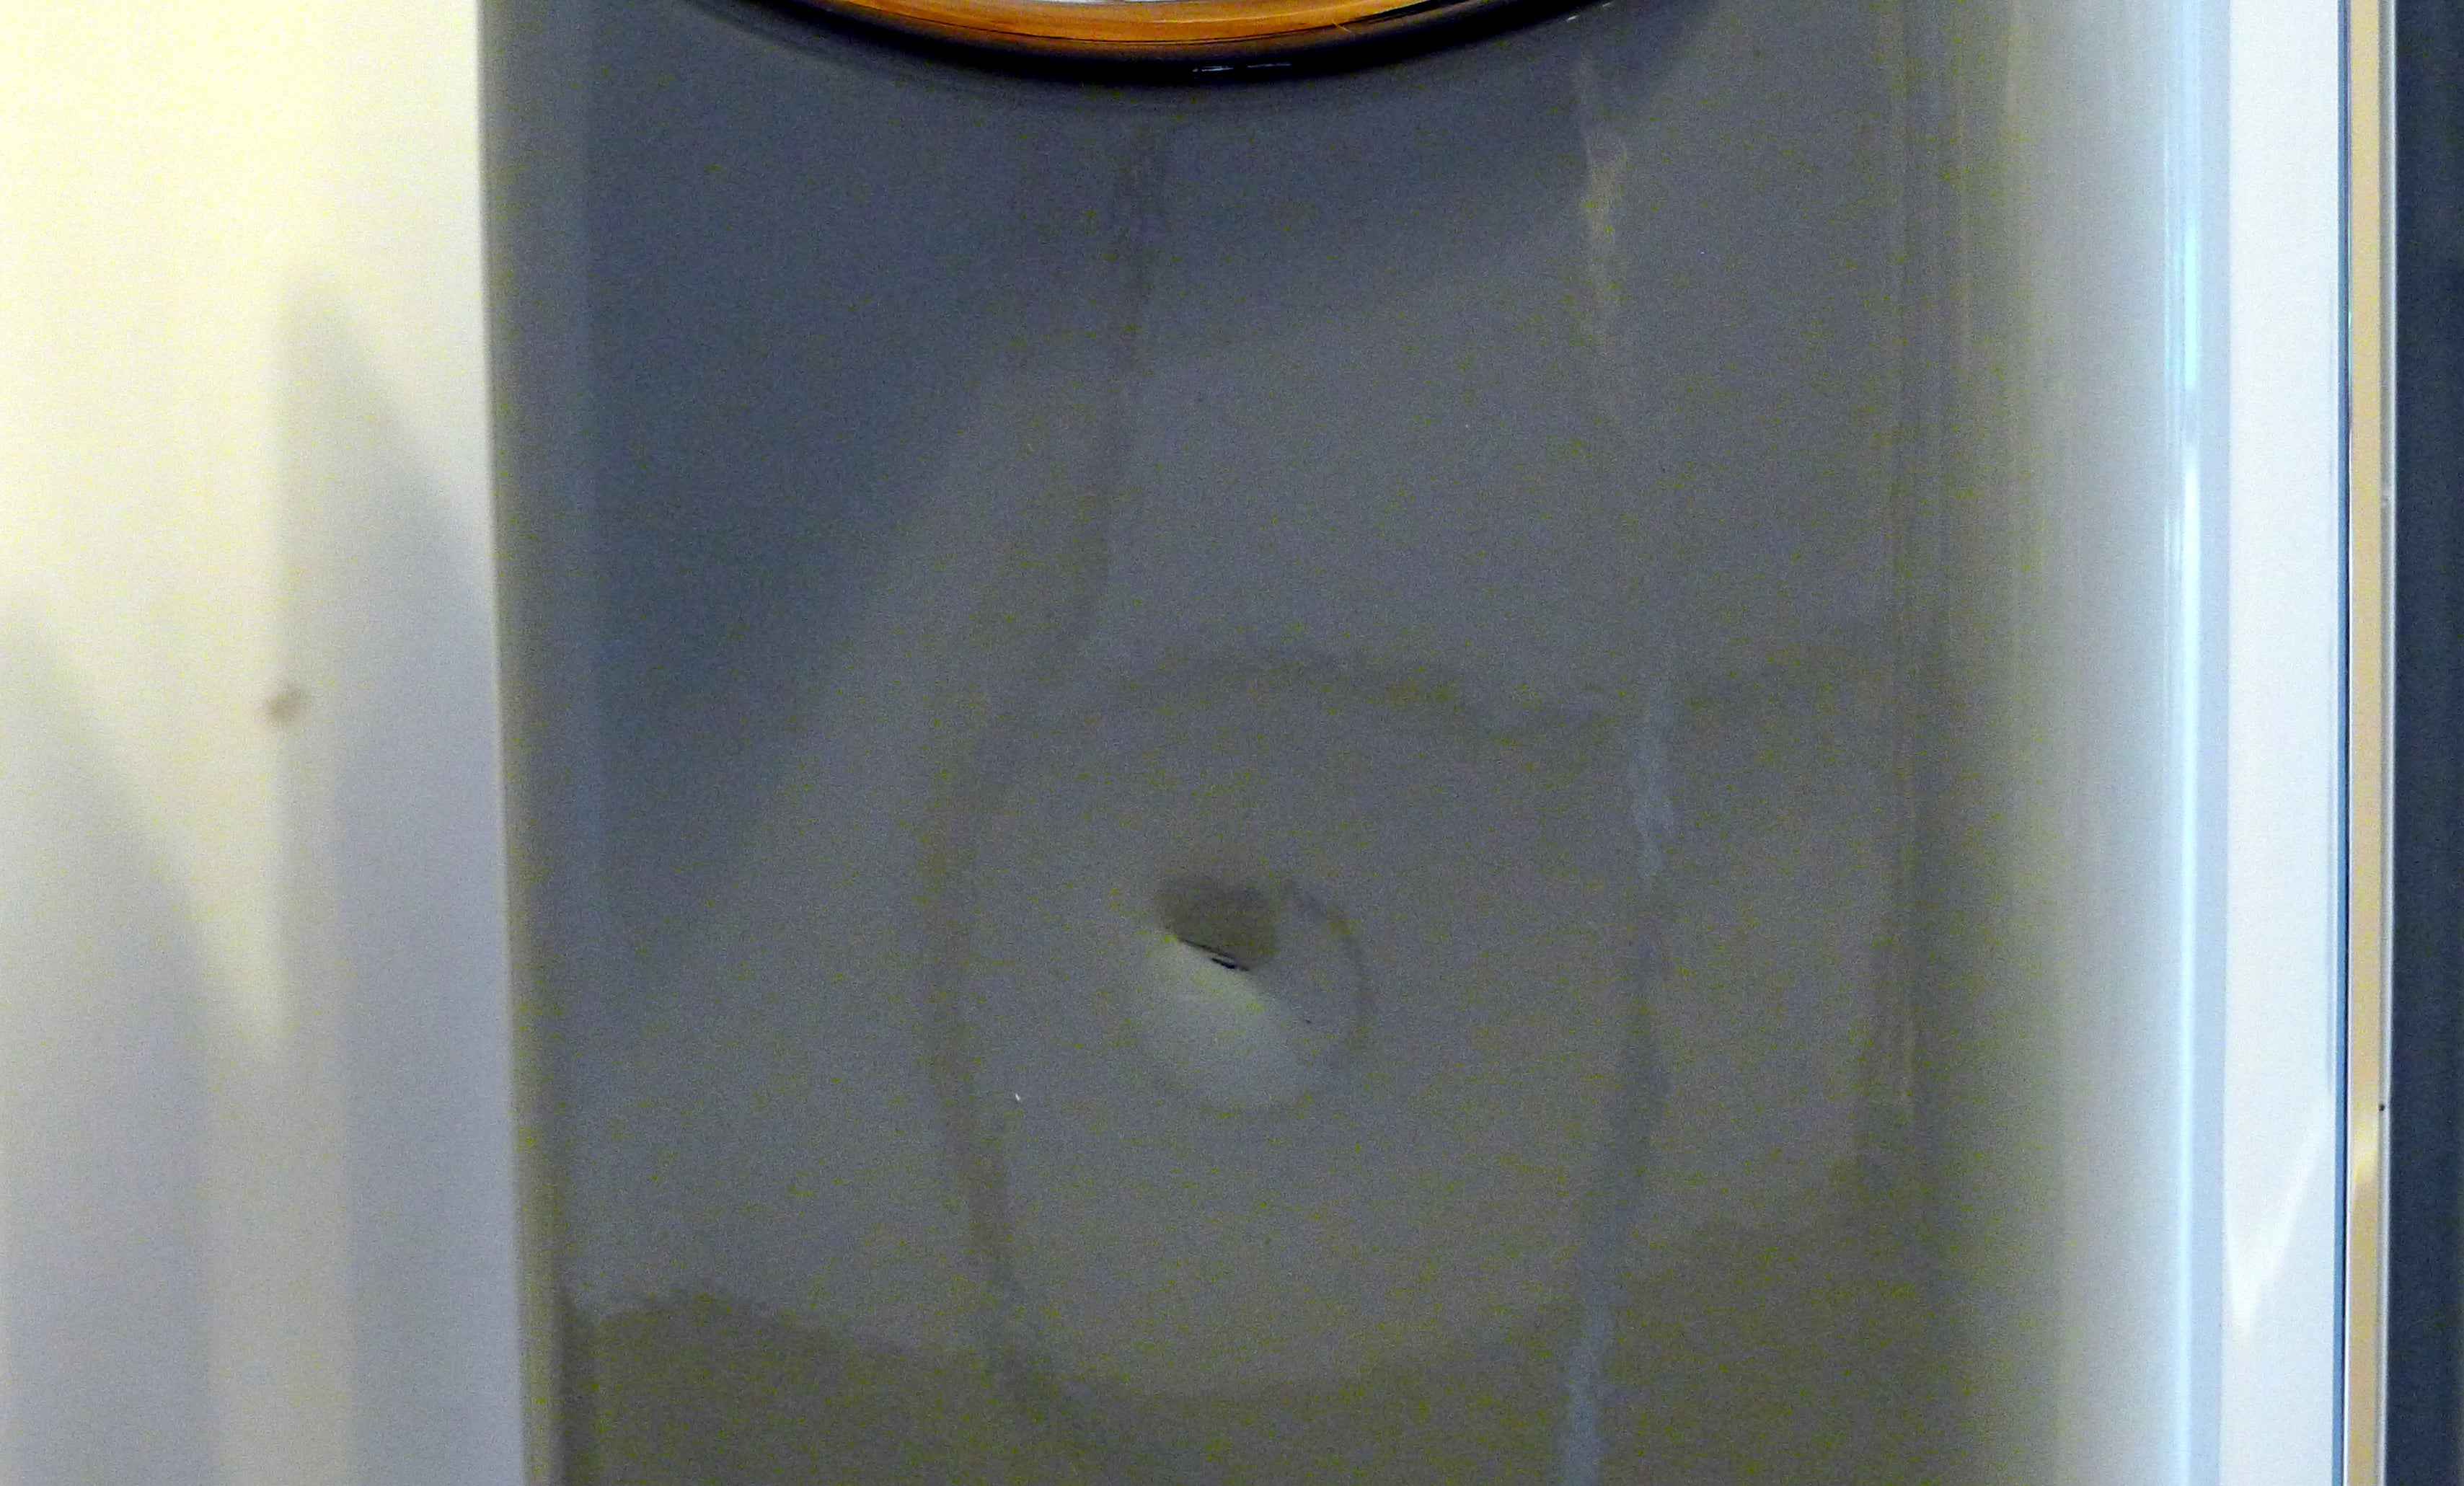 Swan Retro Oil Filled Radiator DentClose up view of a dent on a silver Swan oil-filled radiator